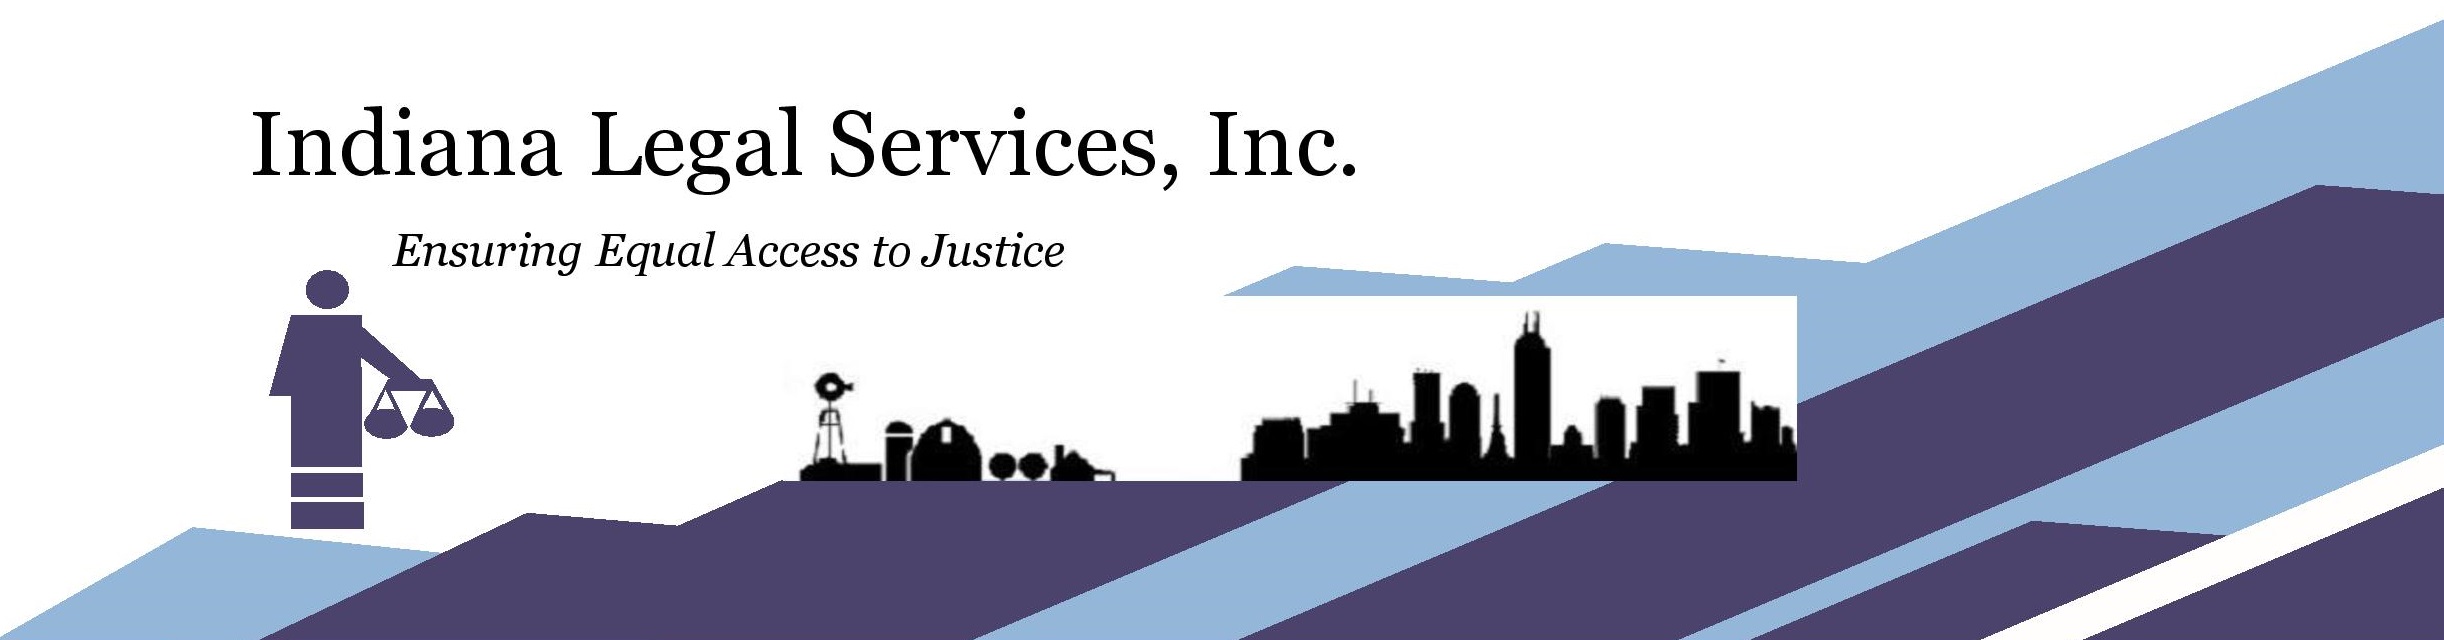 Legal Aid - Indiana Legal Services, Inc.